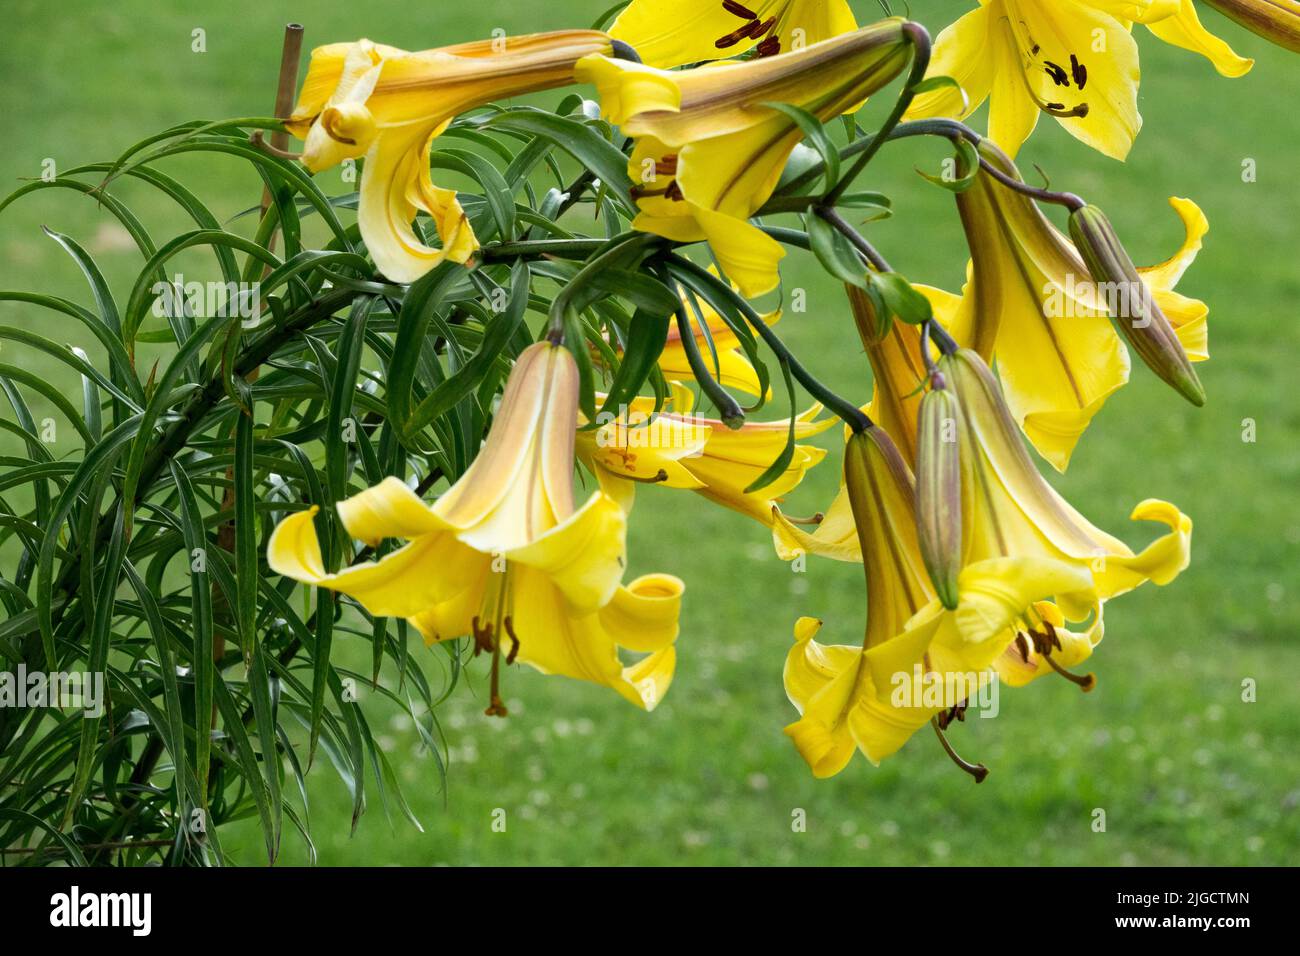 Hermoso Lilium, flores tubulares, Lilium 'Esplendor dorado', lirio trompeta, lirios amarillos en jardín impresionantes flores hermoso cultivar Foto de stock